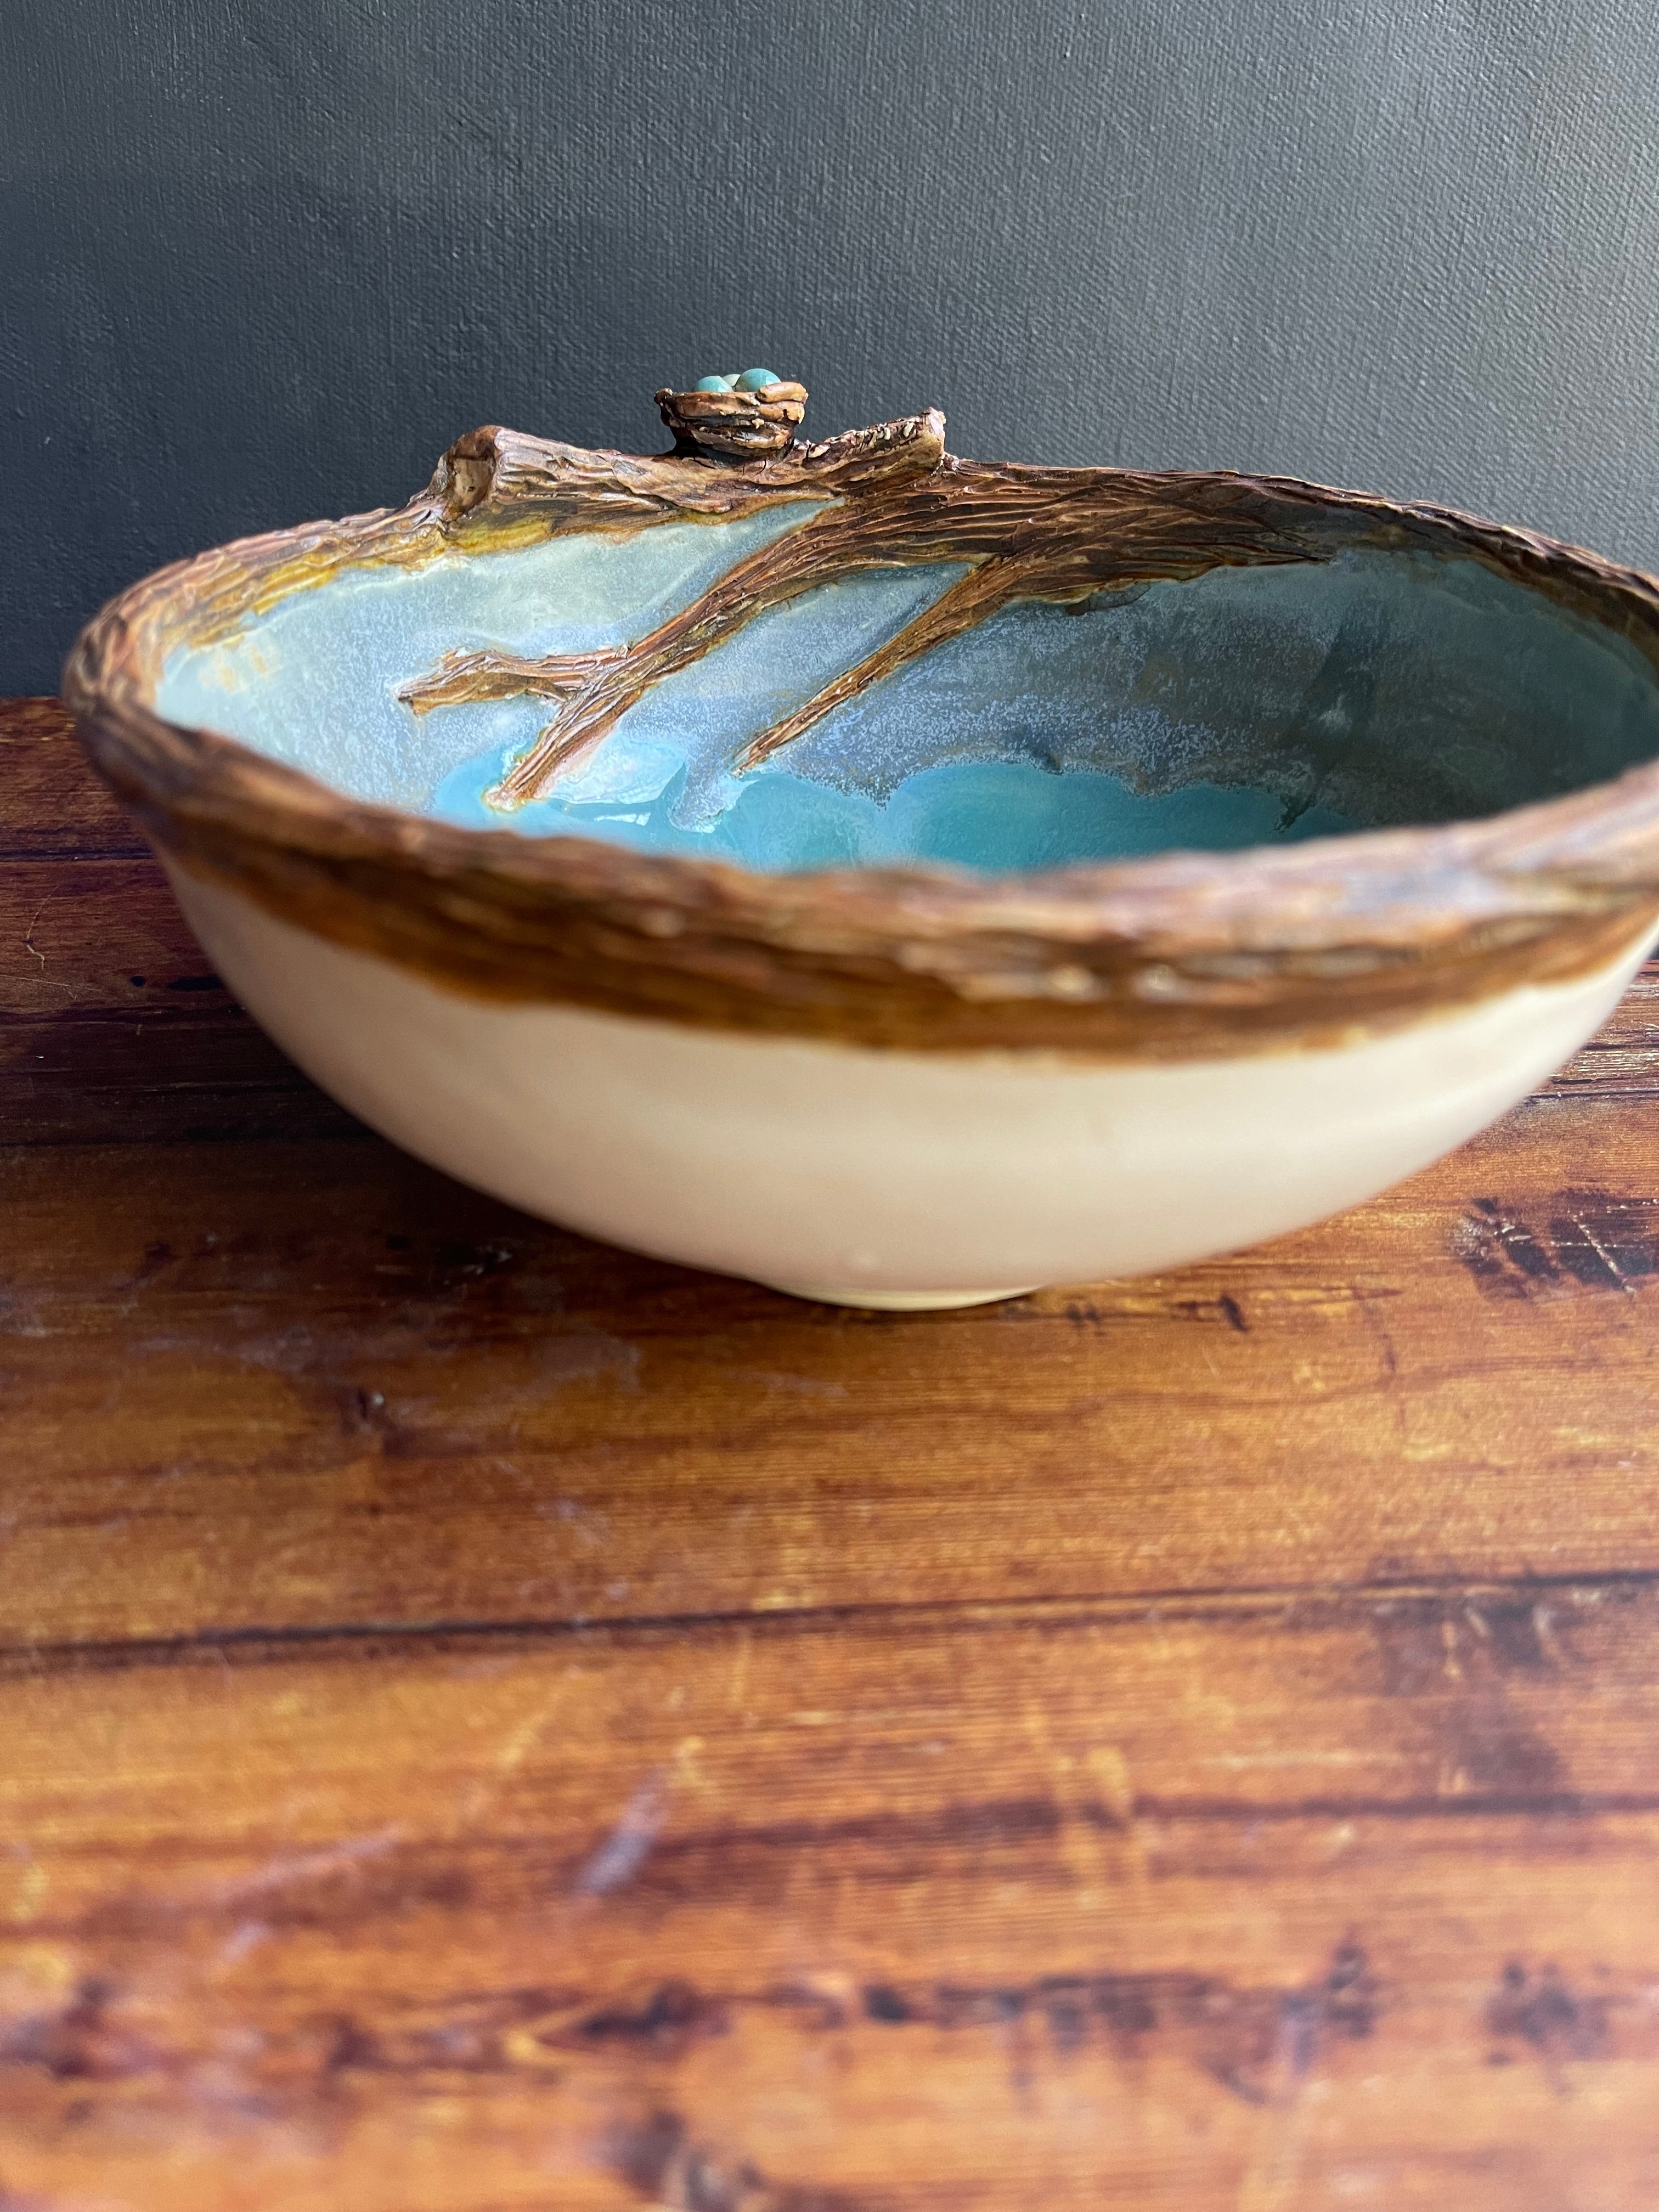 Ceramic bowl with birds nest